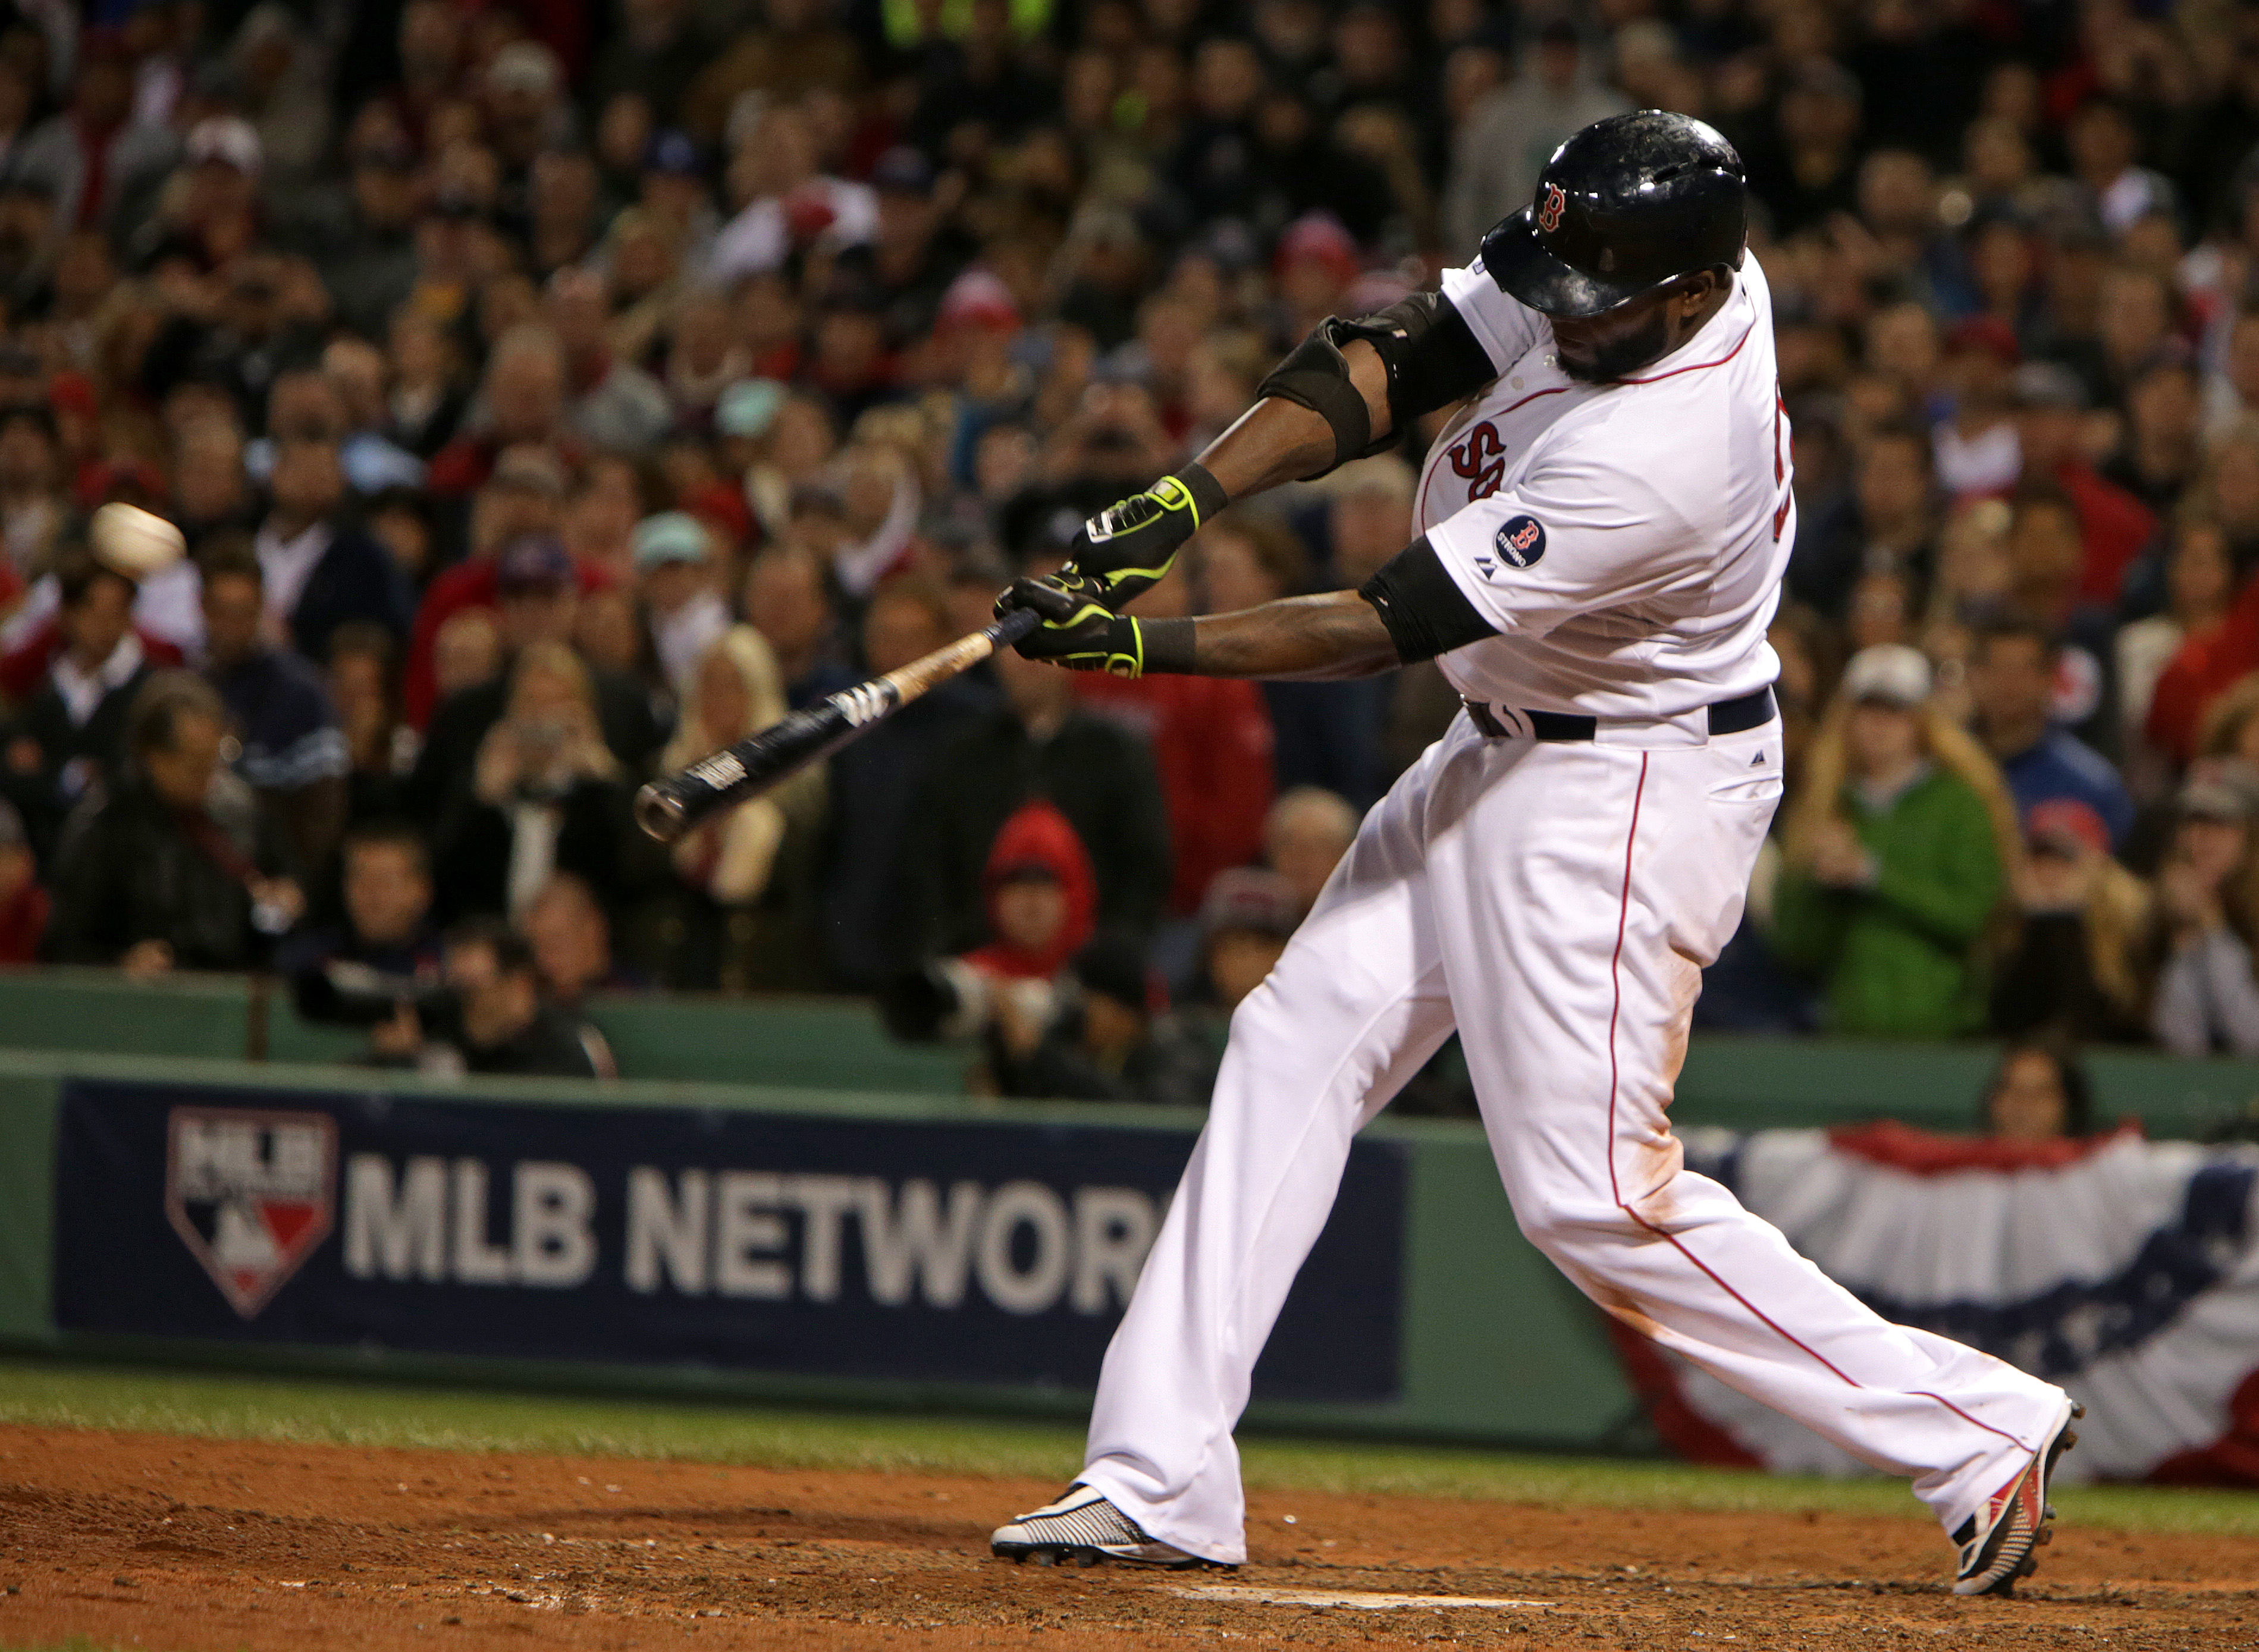 David Ortiz's tiebreaking home run lifts Red Sox past Yankees, 4-2